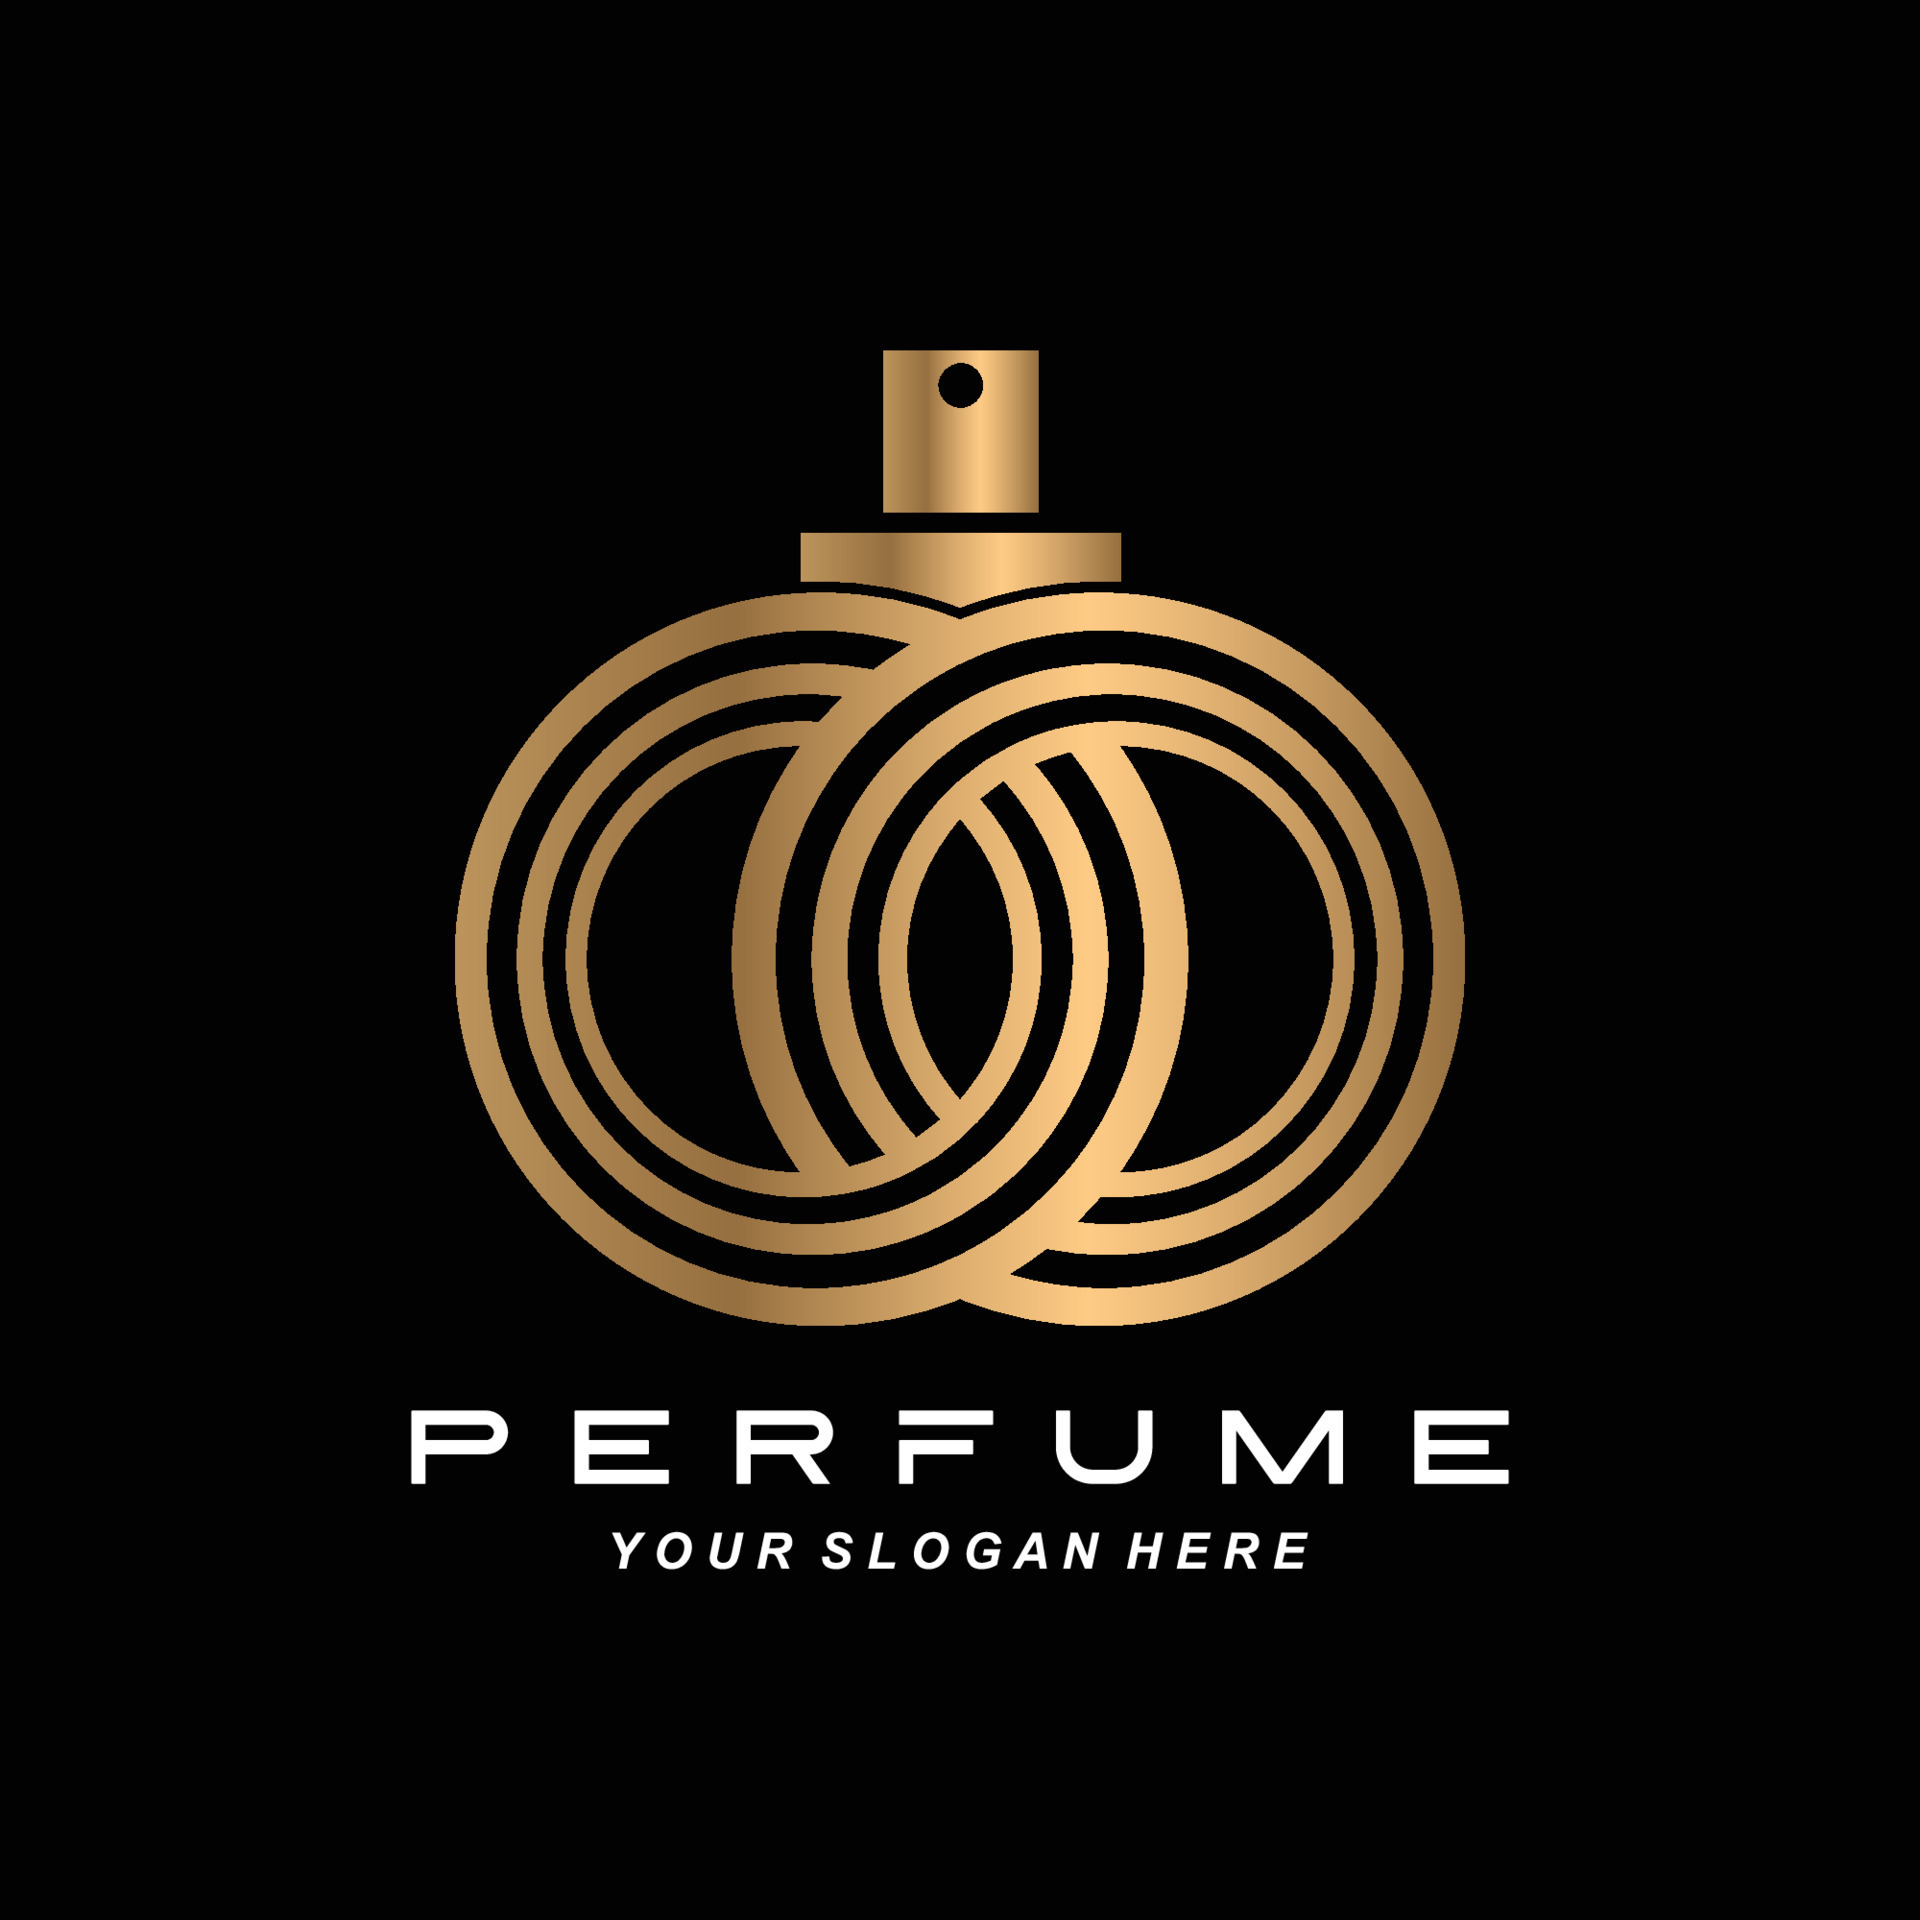 Free Vector  Luxury design for perfume logo